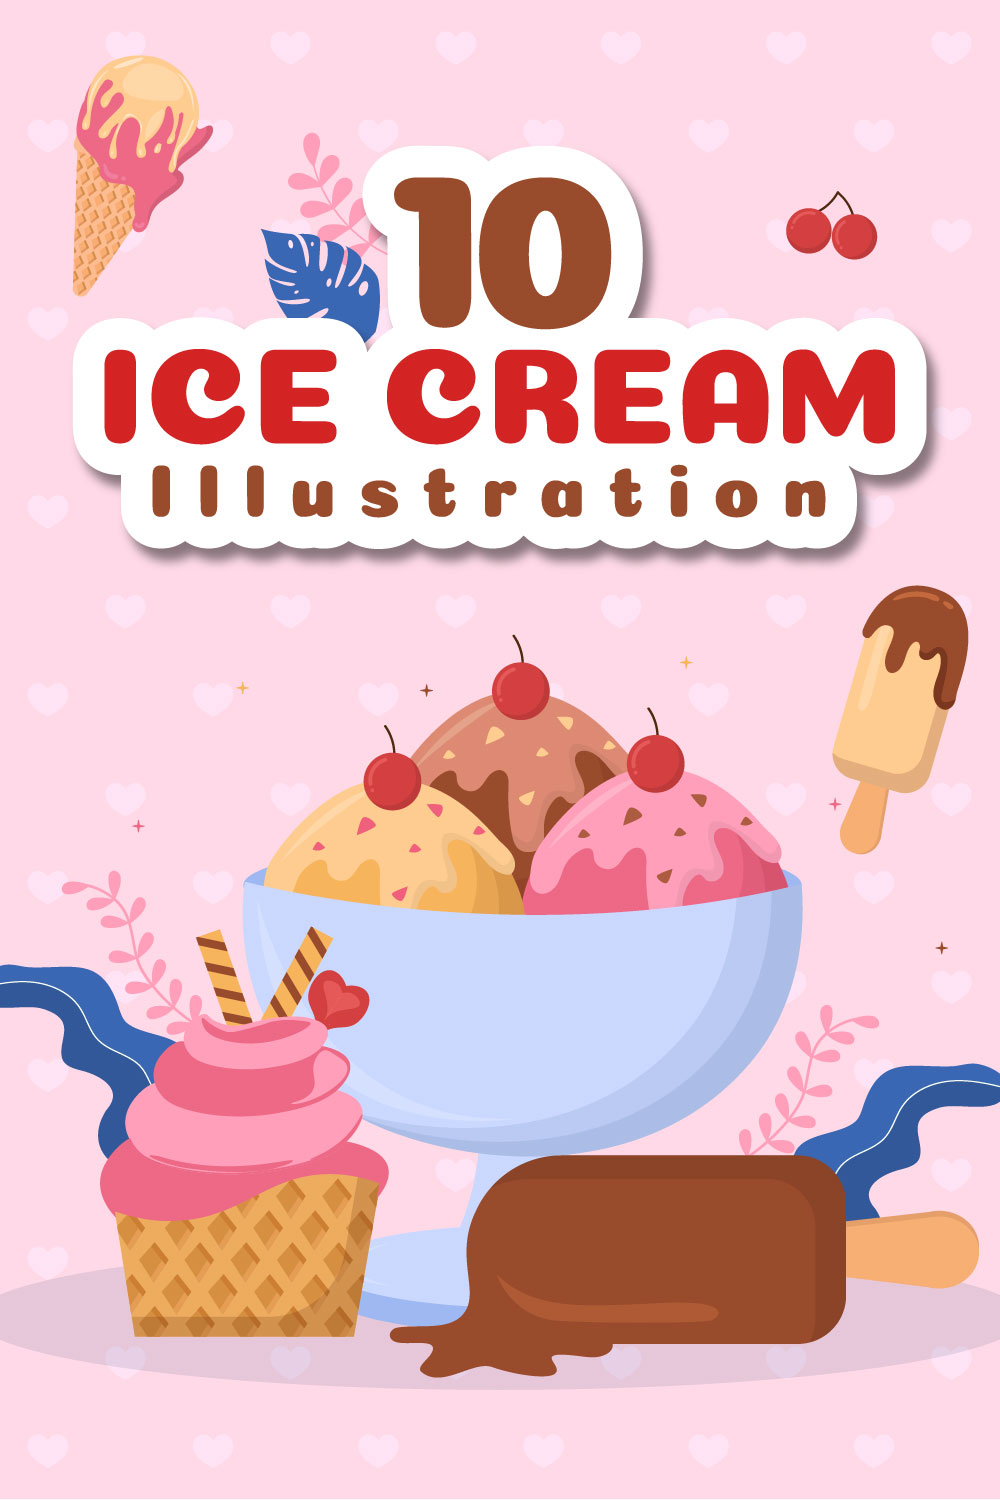 Ice Cream Illustration cover image.